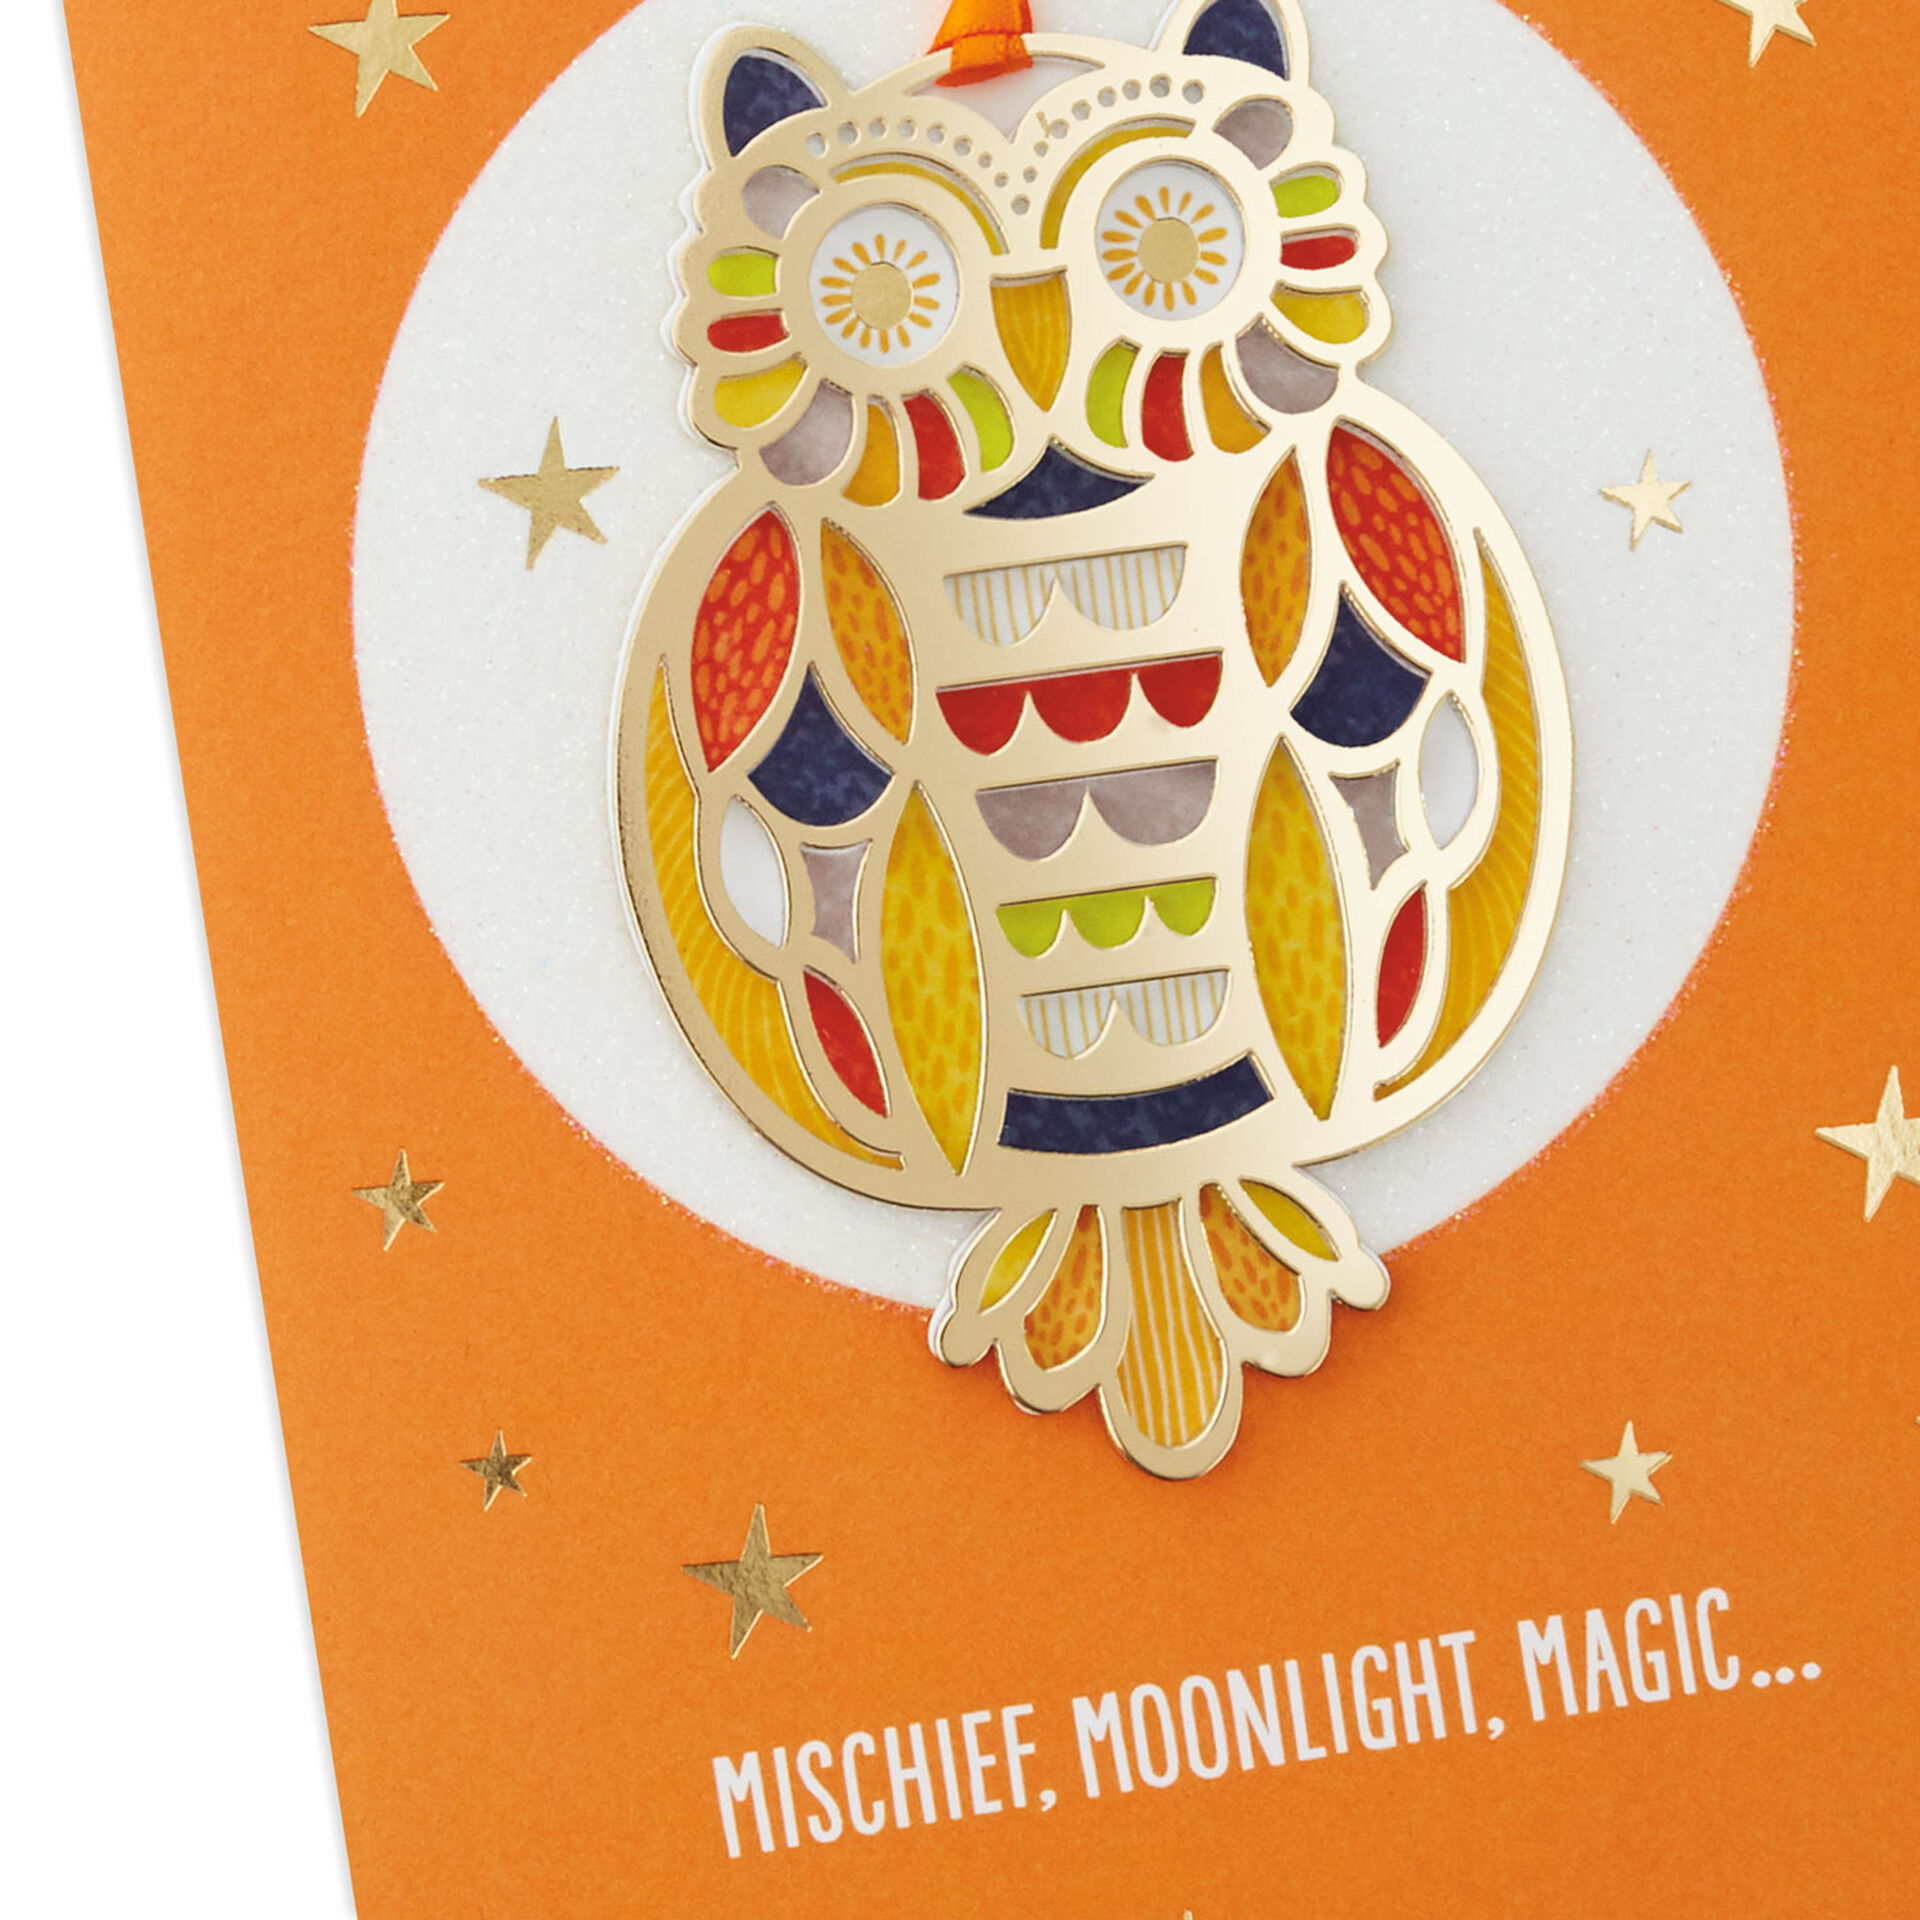 Mischief. Moonlight. Magic. Halloween Card - Greeting Cards - Hallmark